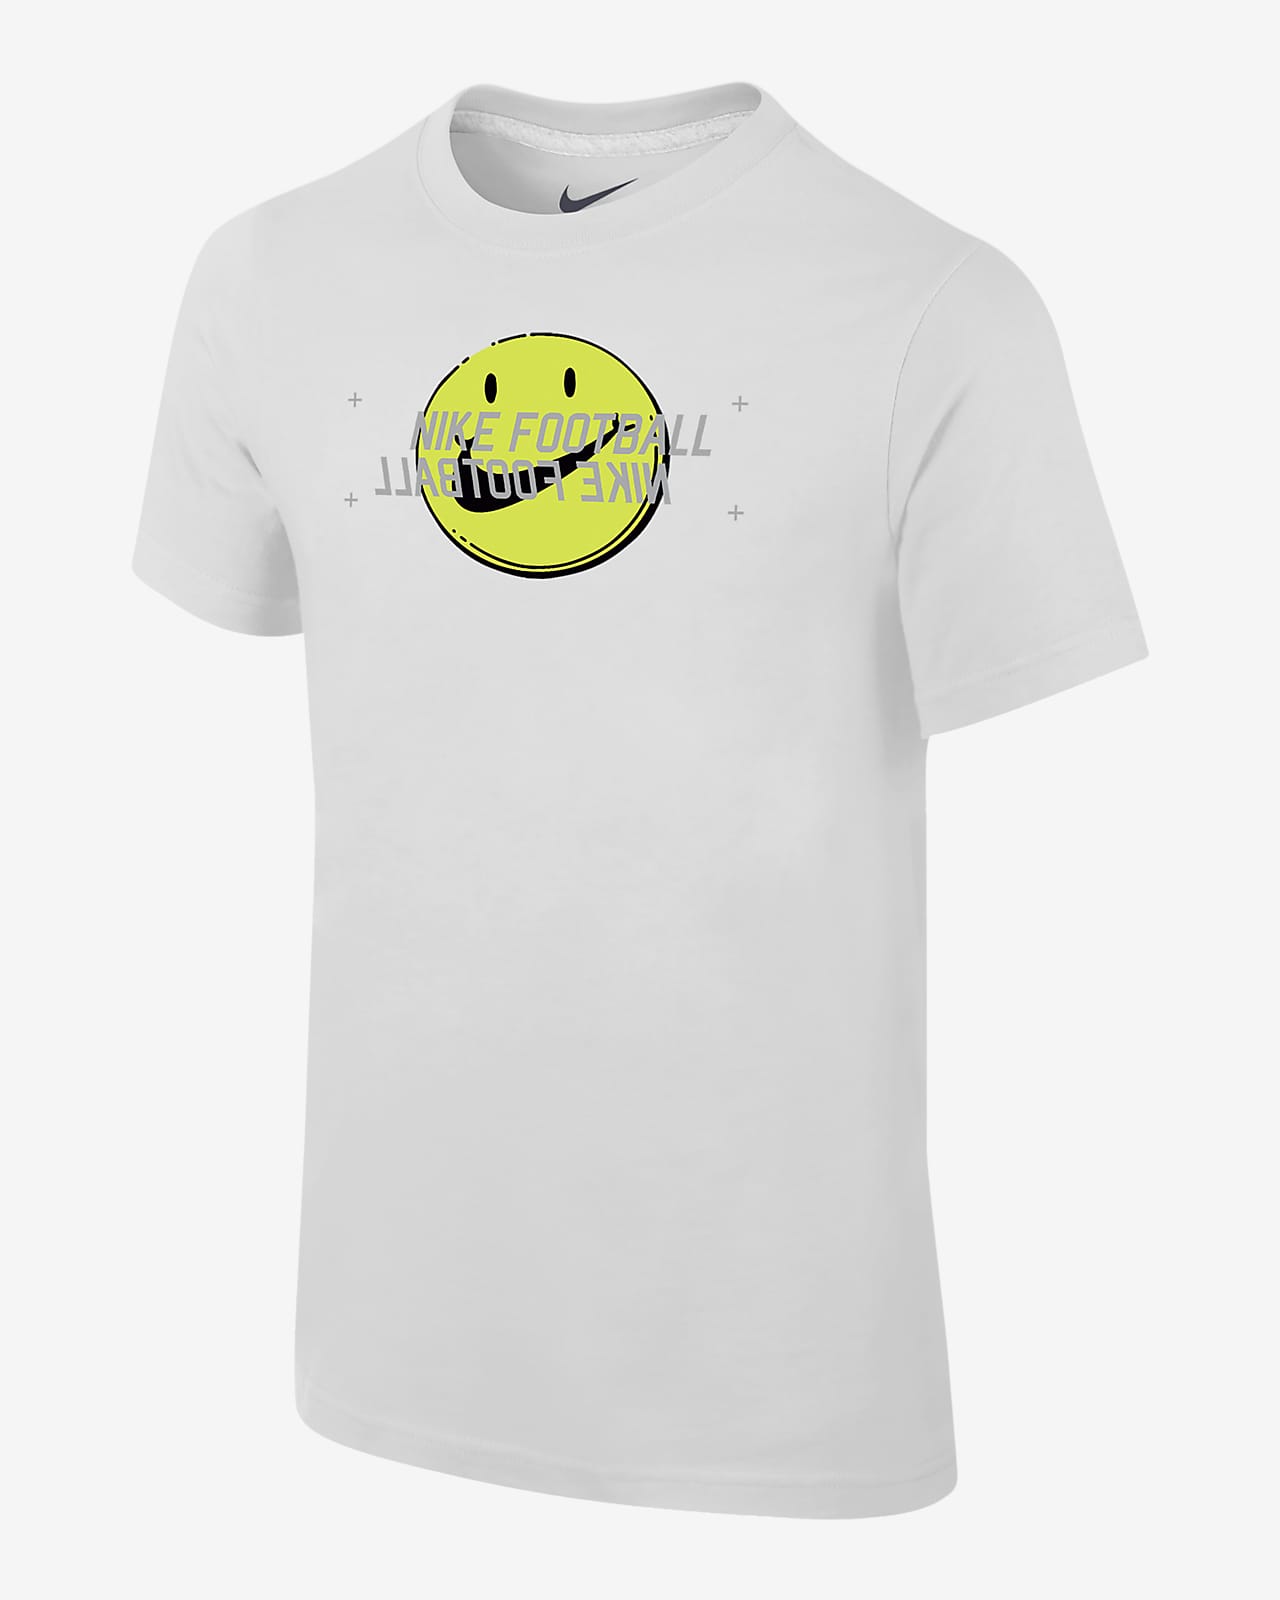 7-on-7 Football Big Kids' (Boys') Nike T-Shirt